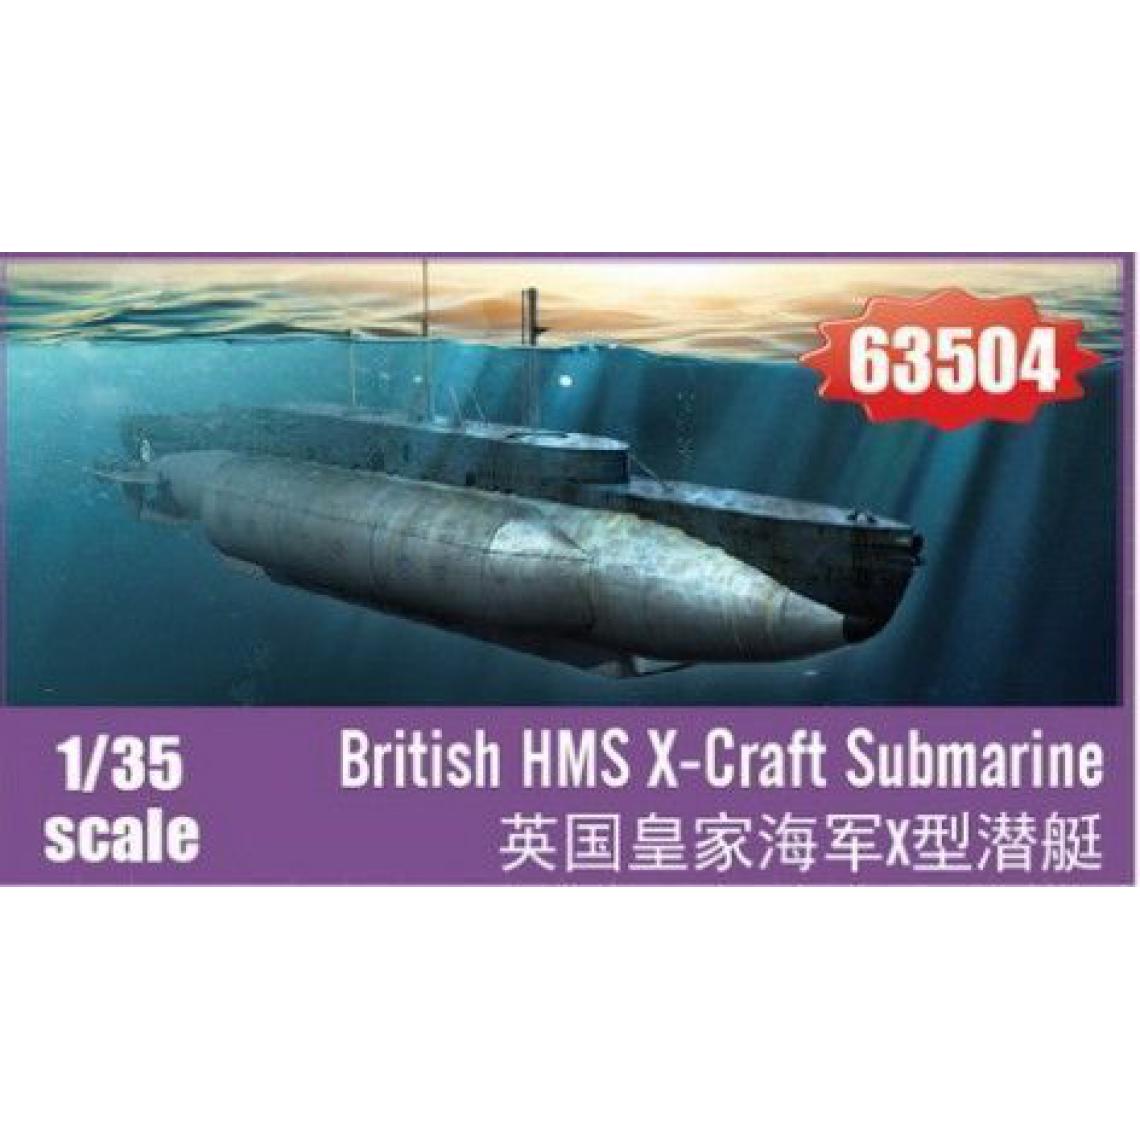 I Love Kit - British HMS X-Craft Submarine - 1:35e - I LOVE KIT - Accessoires et pièces